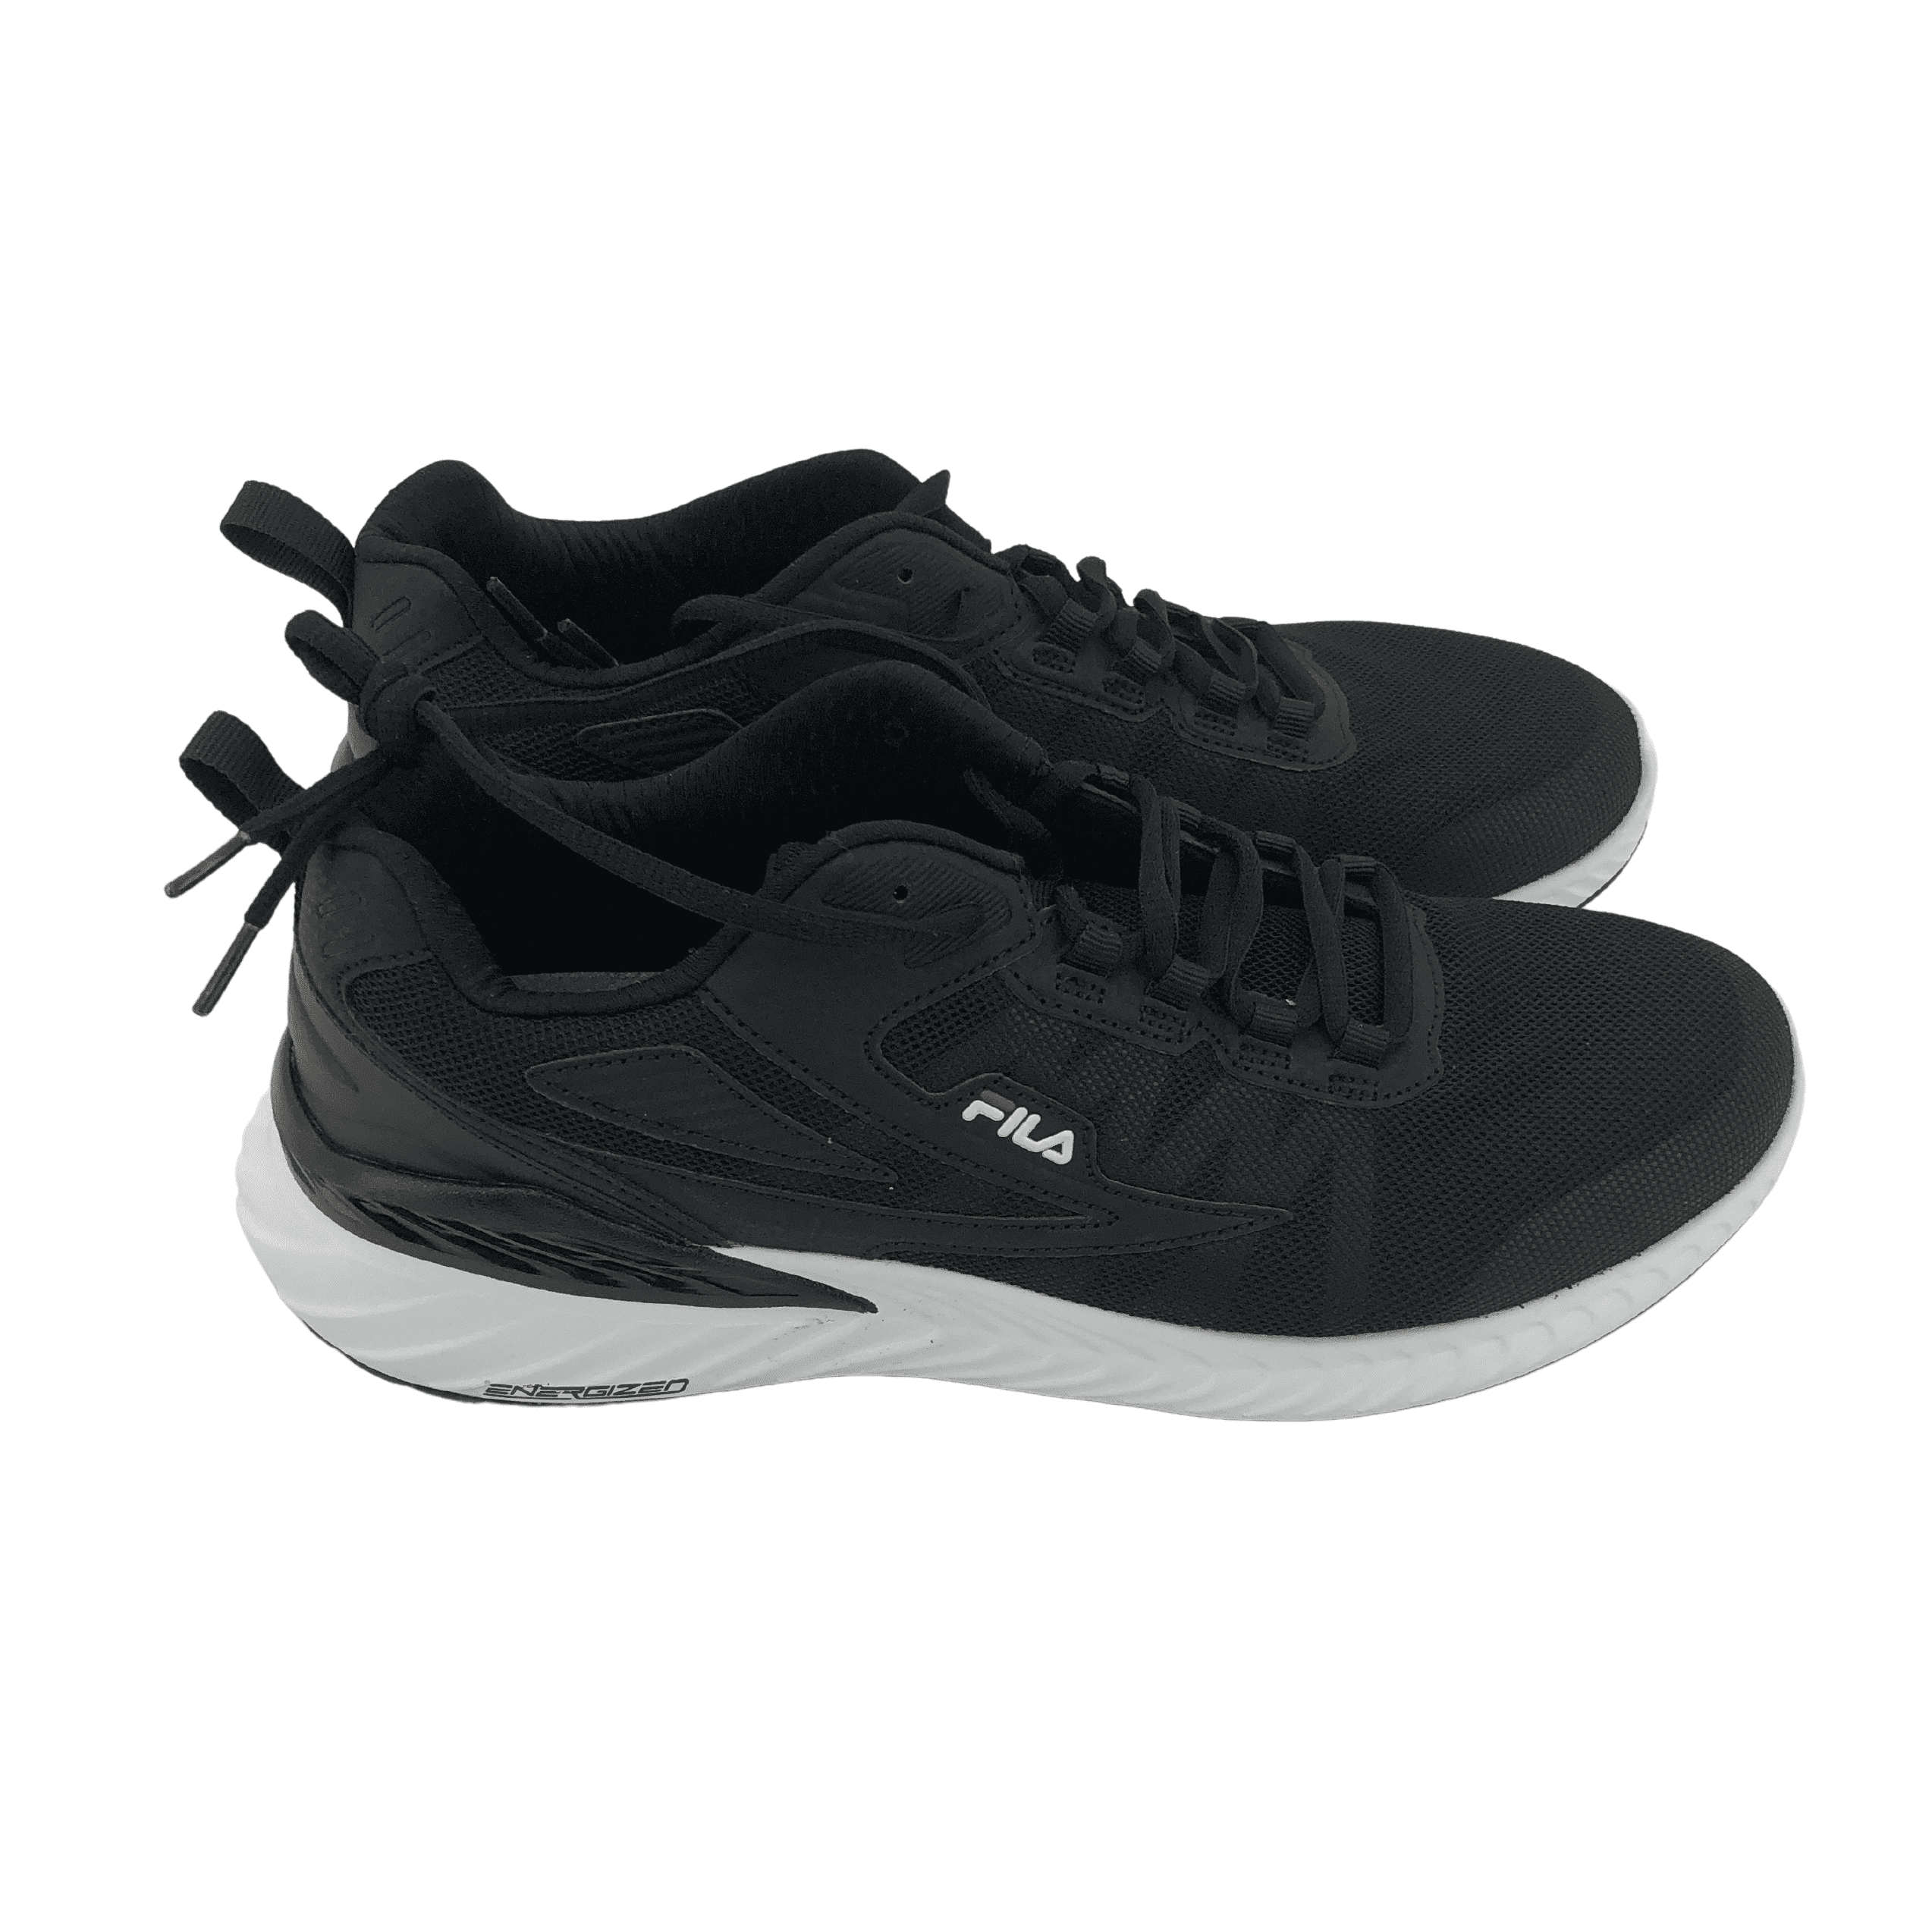 Fila Men's Running Shoes / Trazoros Energized 2 / Black / Size 11